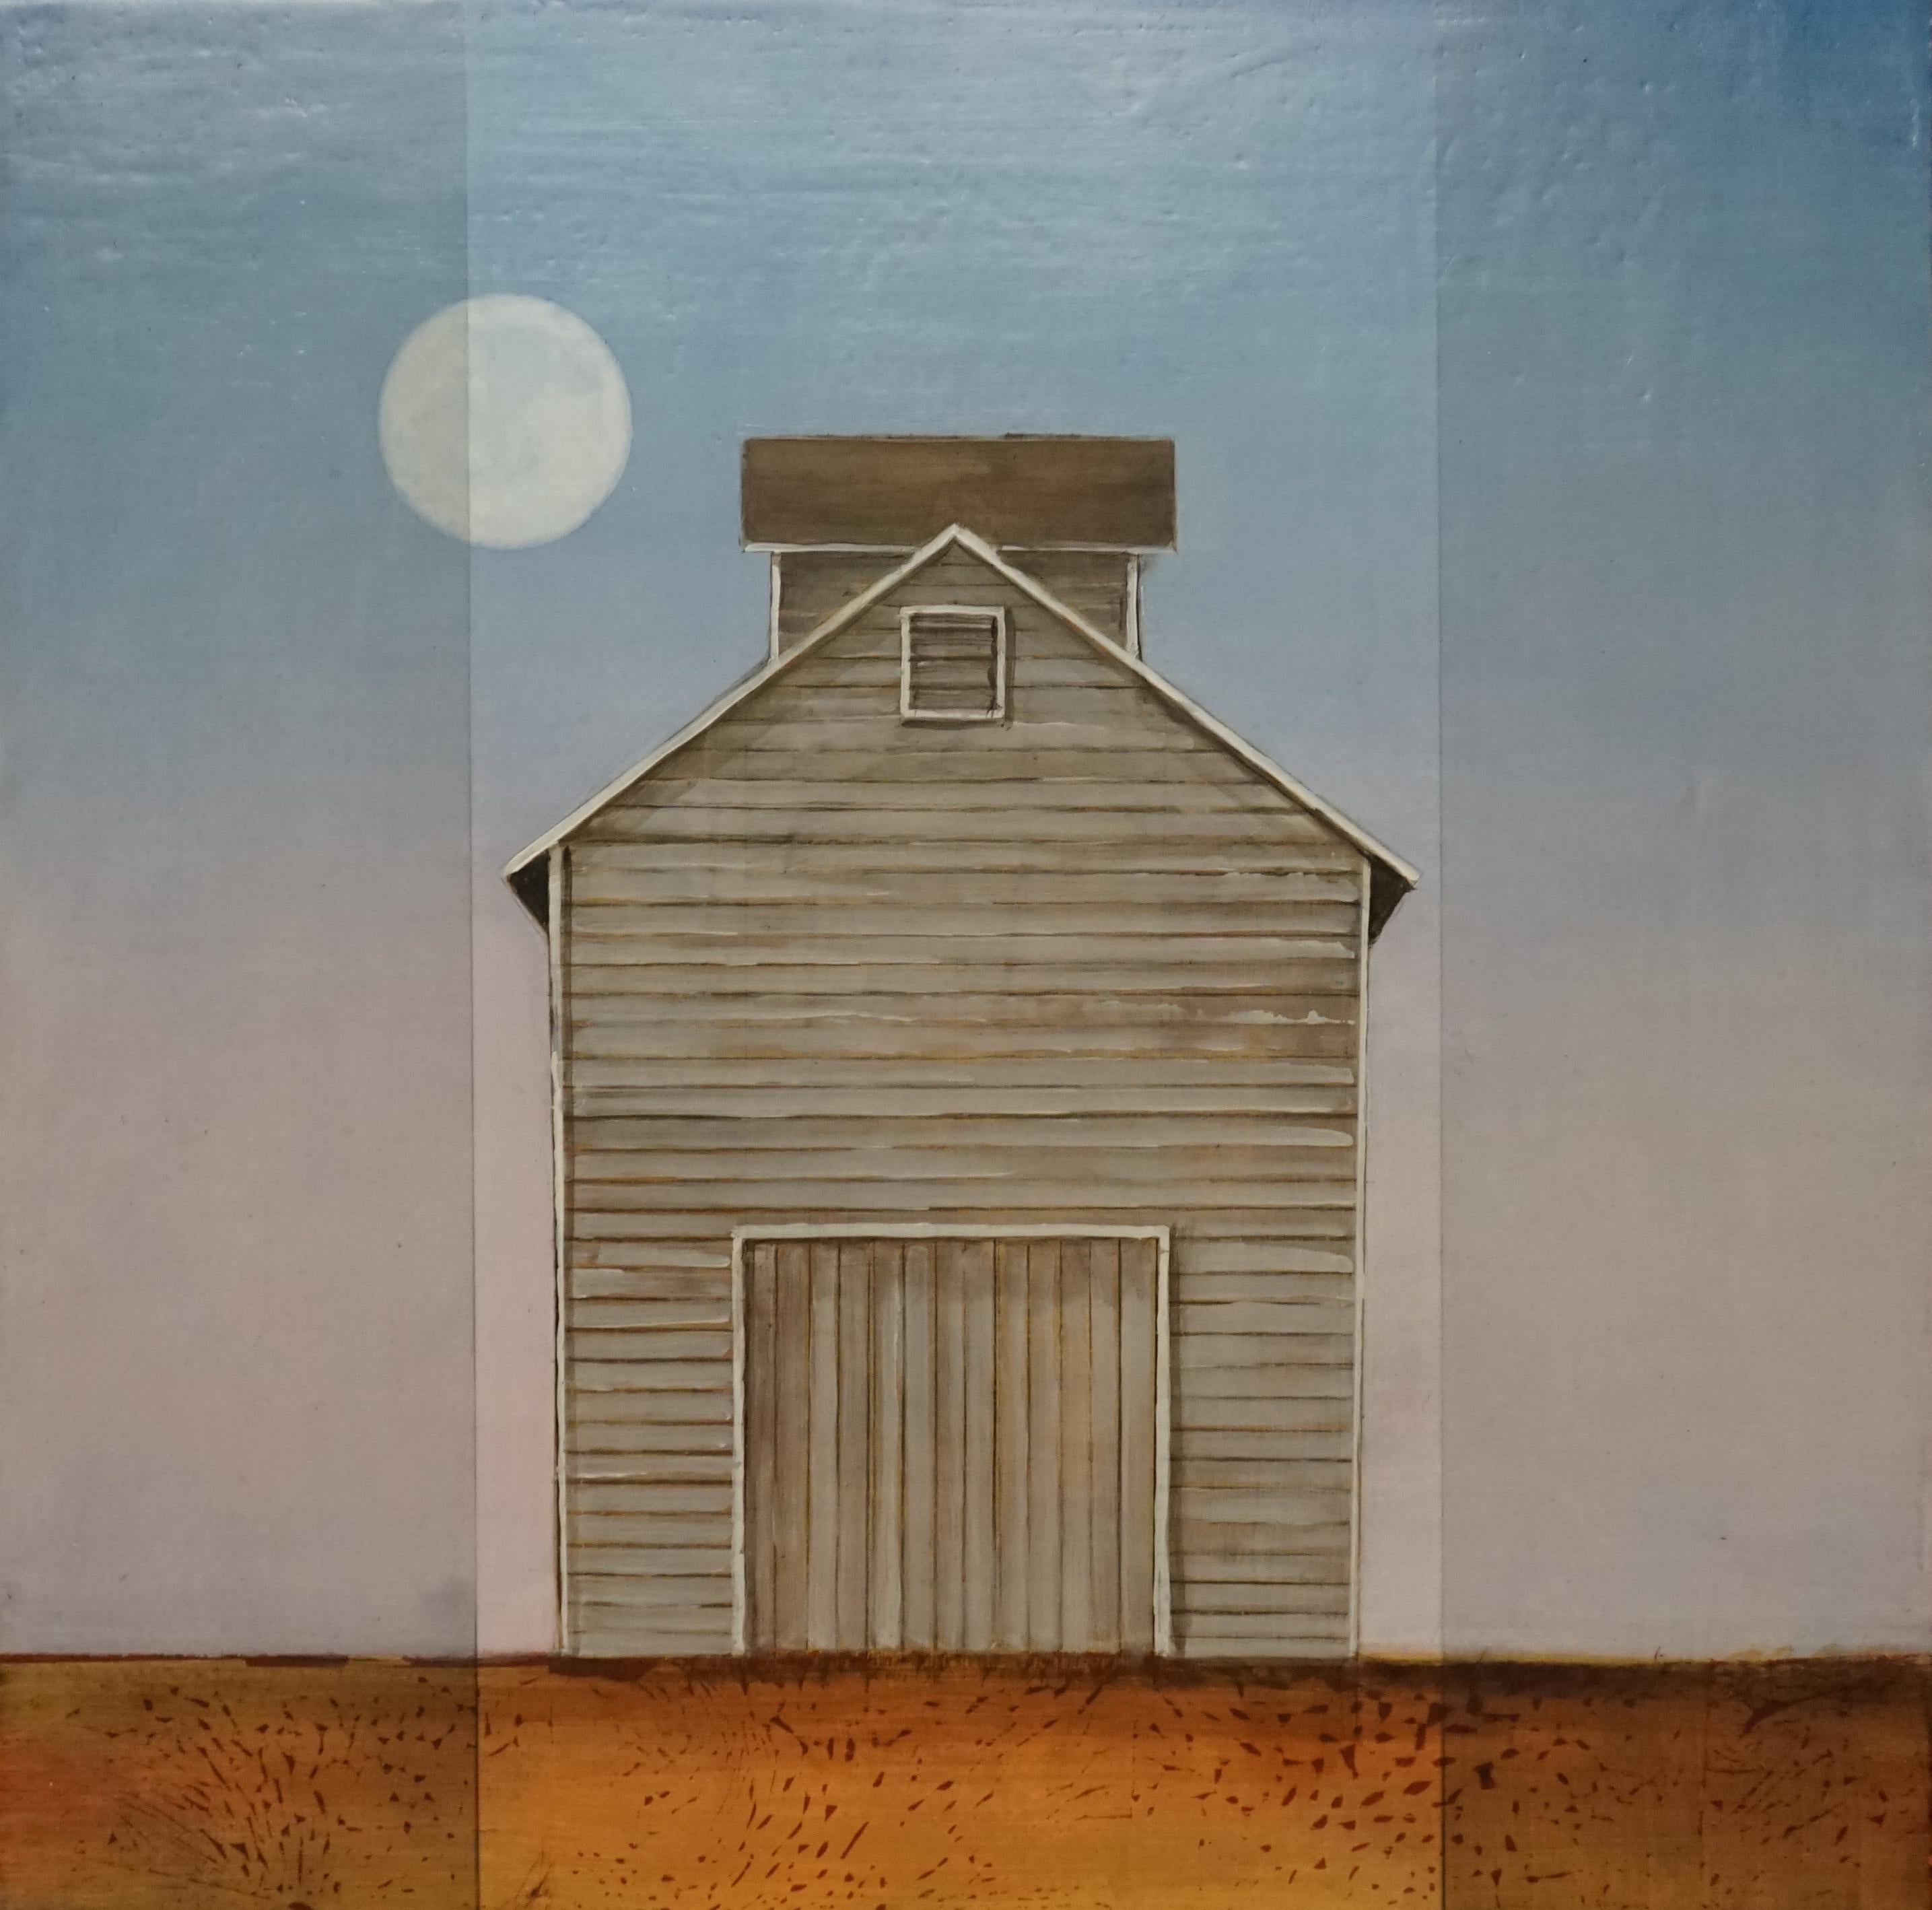 Corn Crib Study with Moon - Painting by Tal Walton